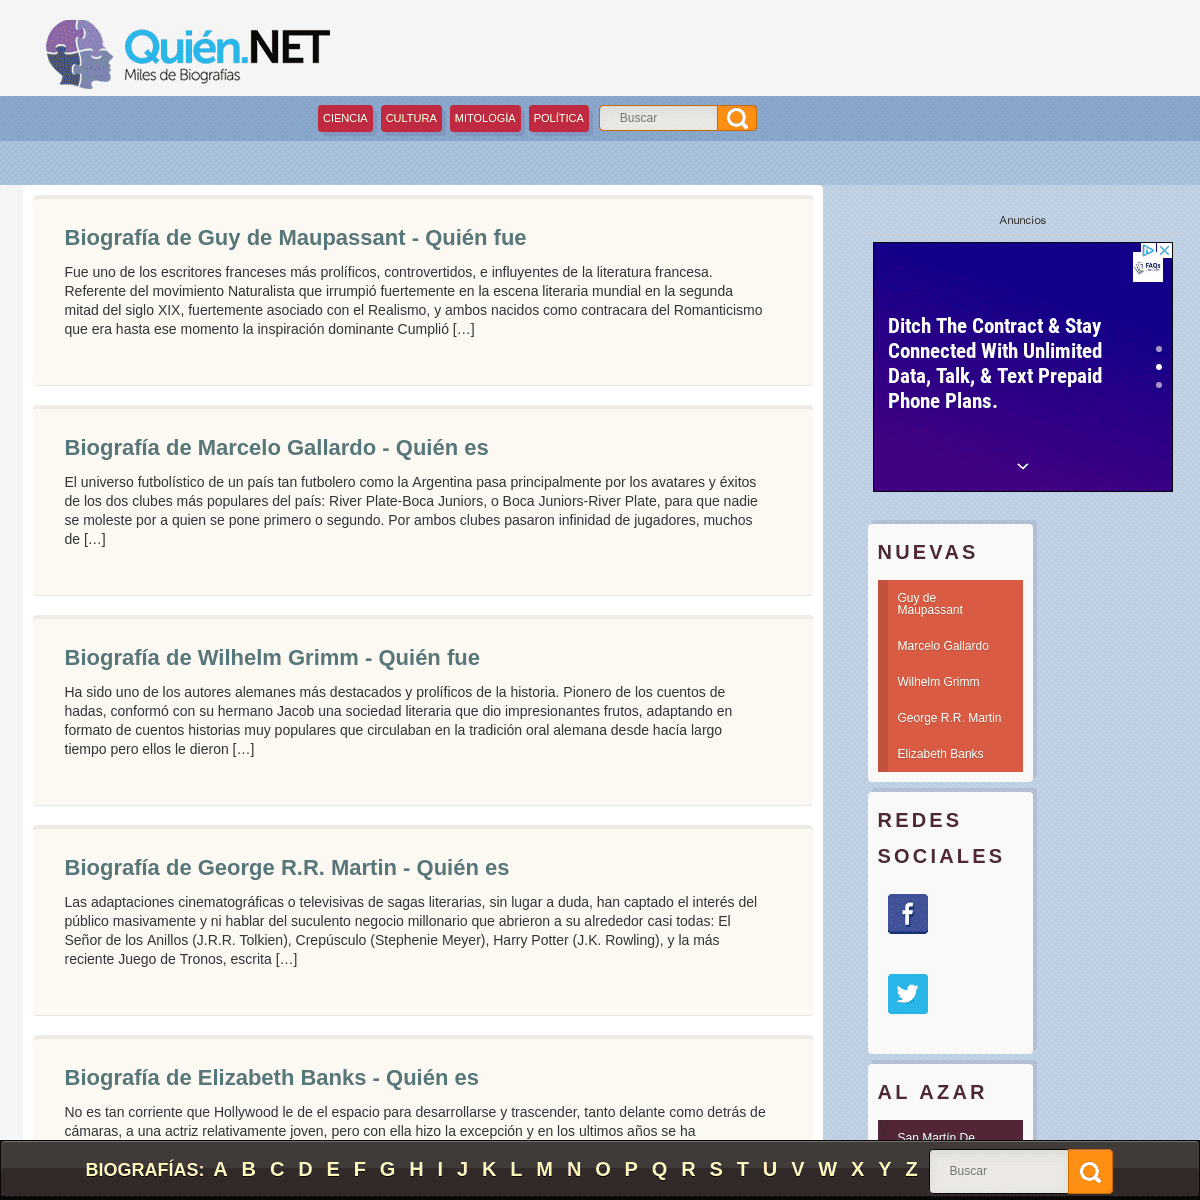 Quien.NET - Biografias